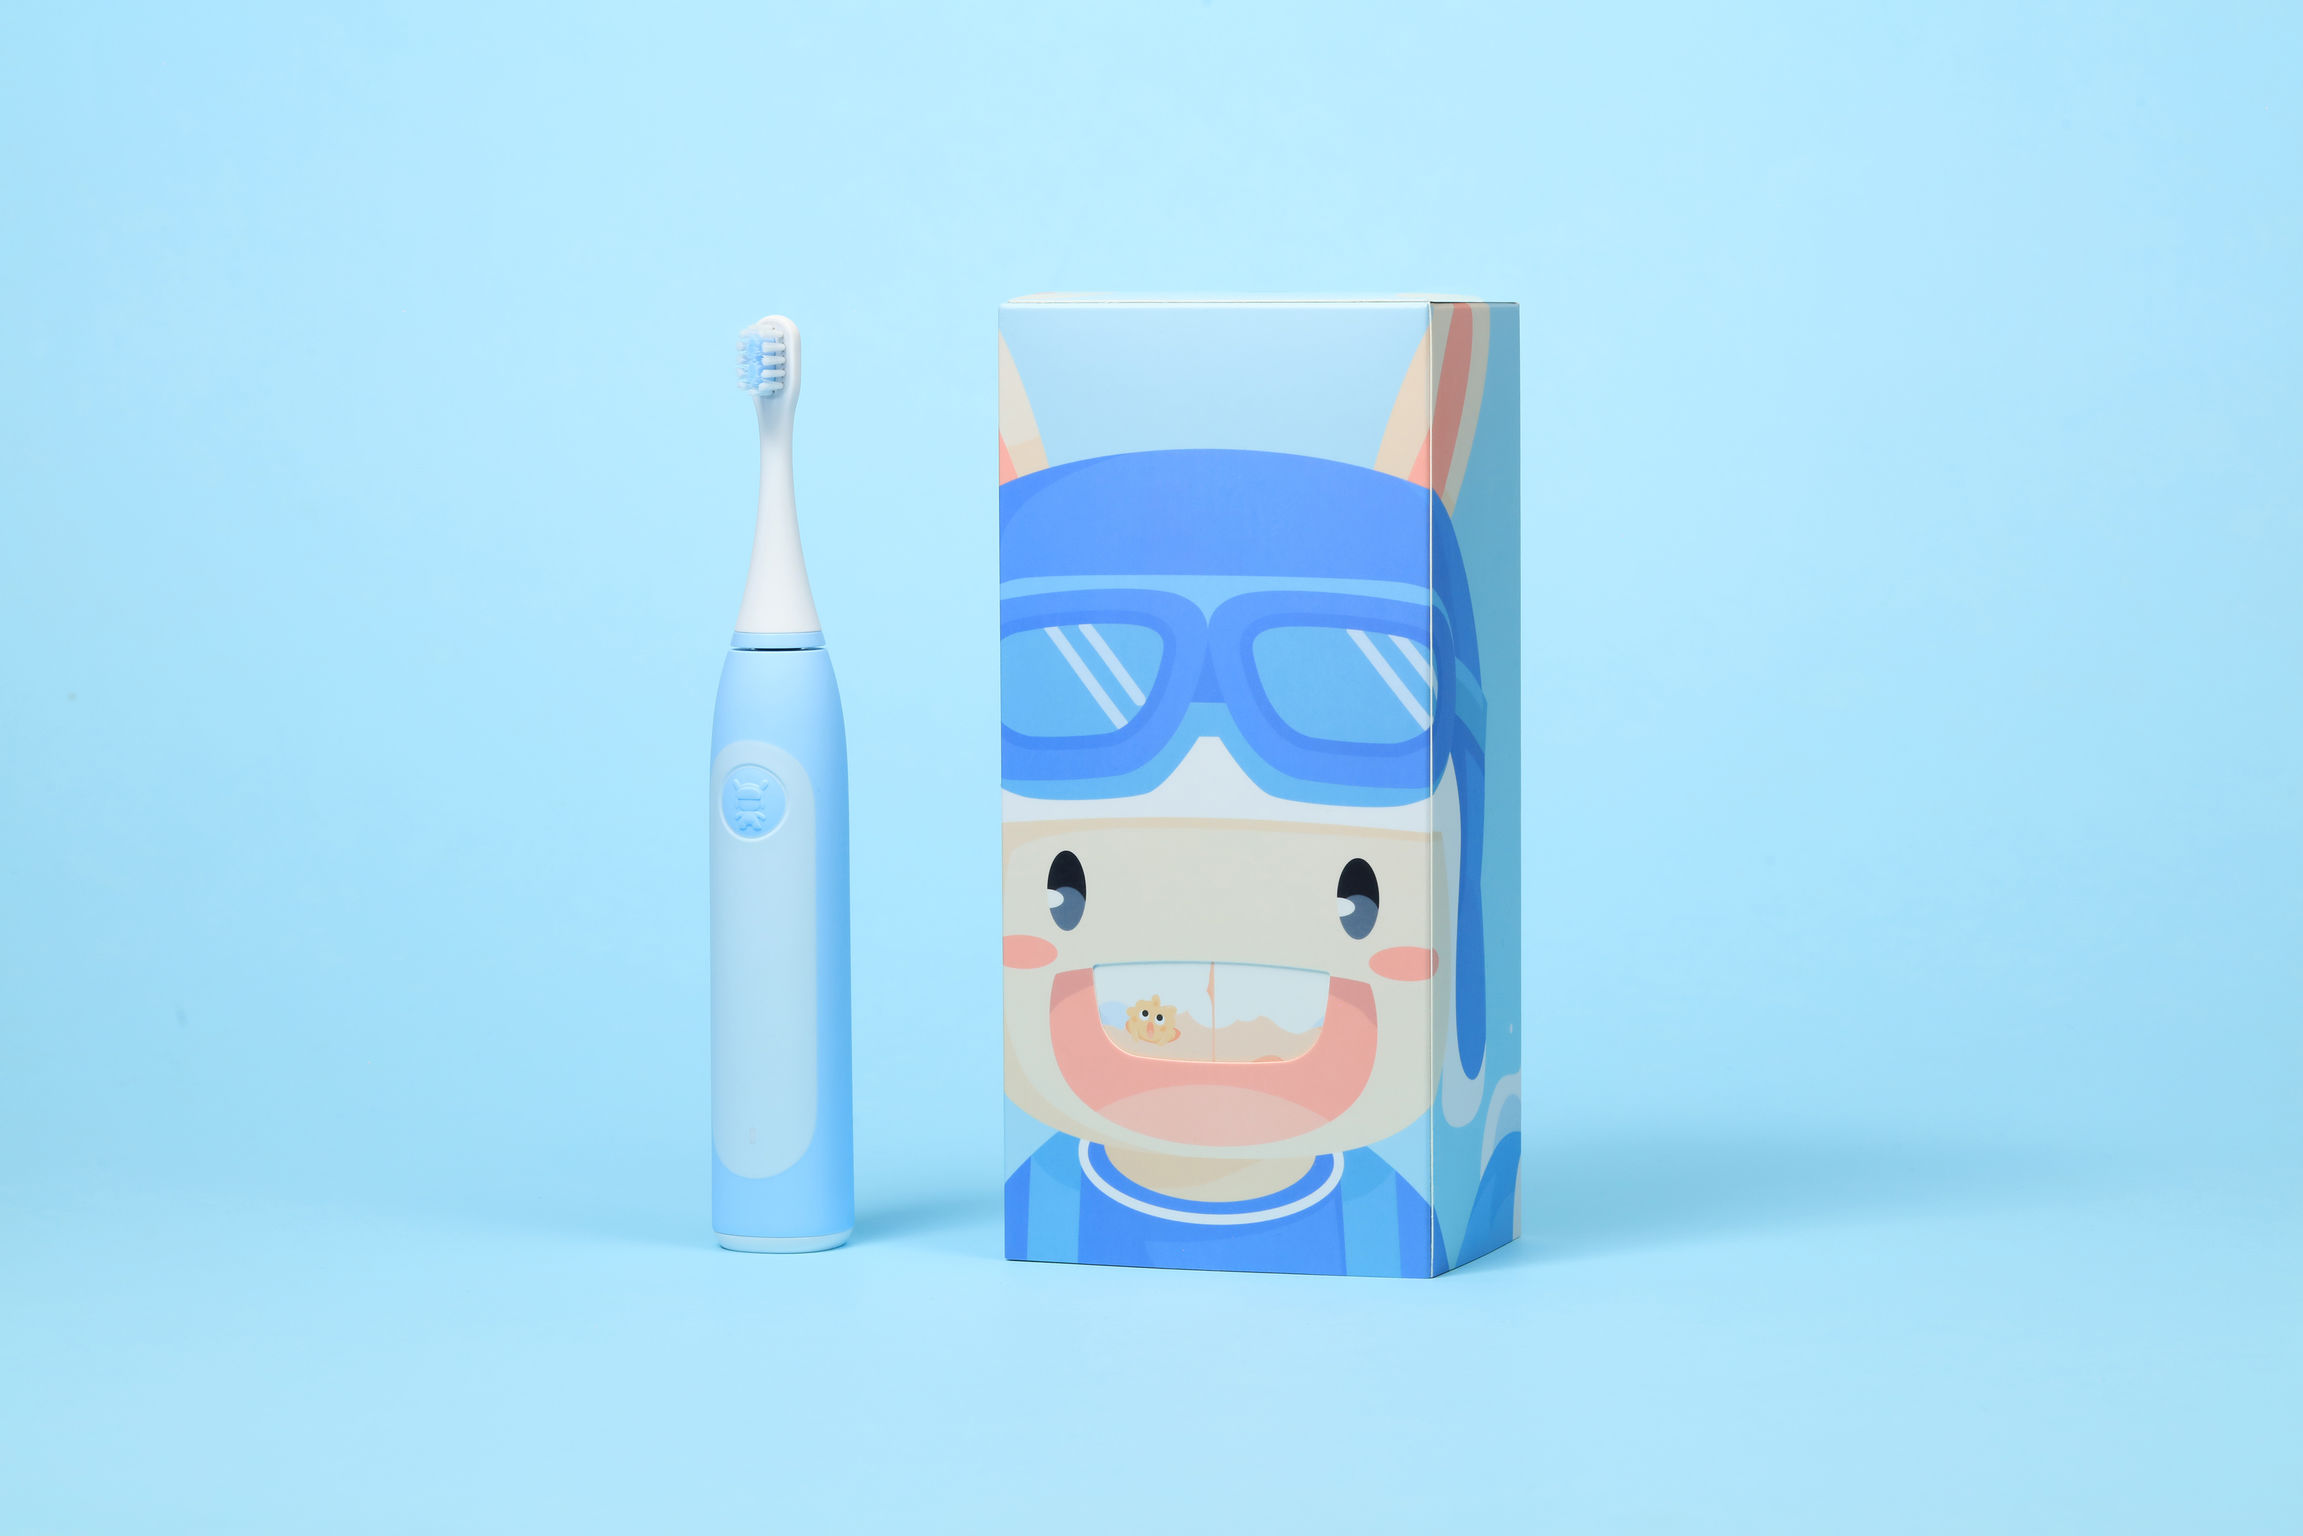 Mi Kids Sonic Electric Toothbrush